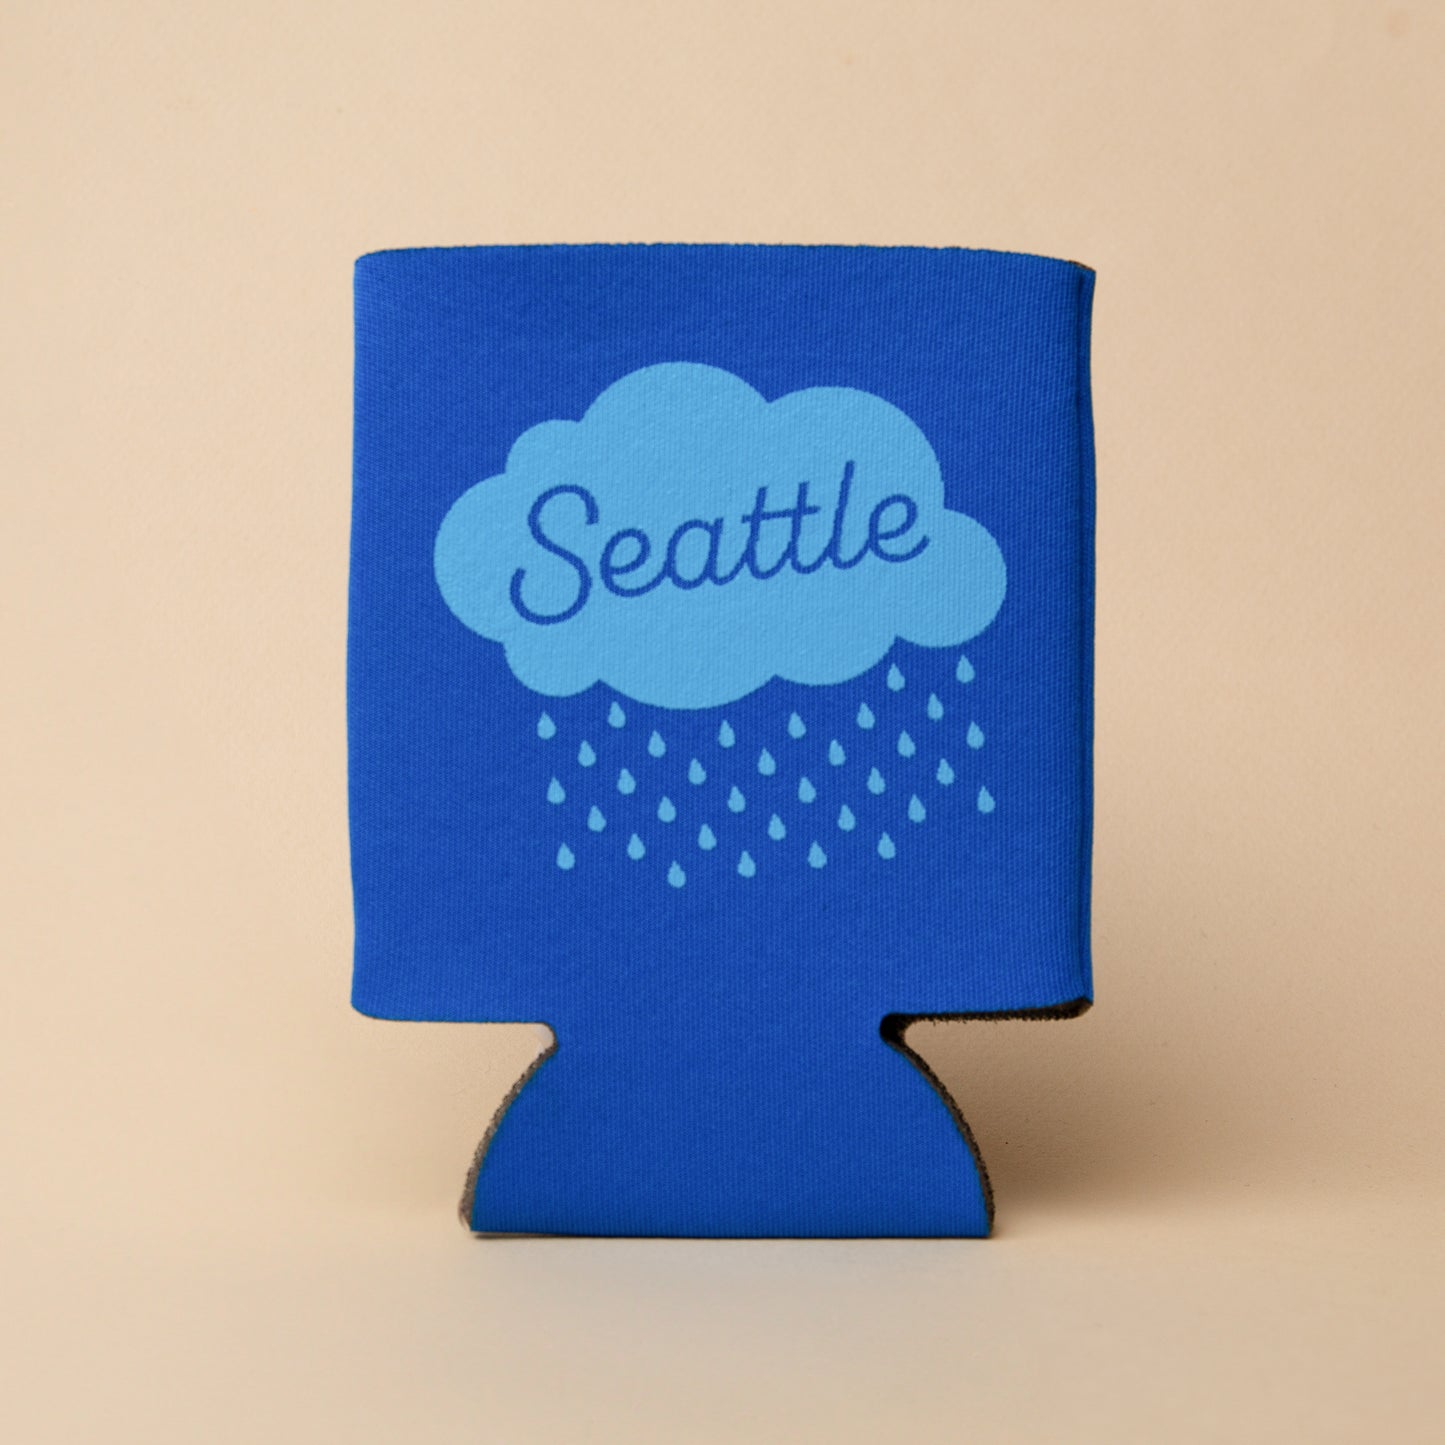 Seattle Rain Beverage Insulator